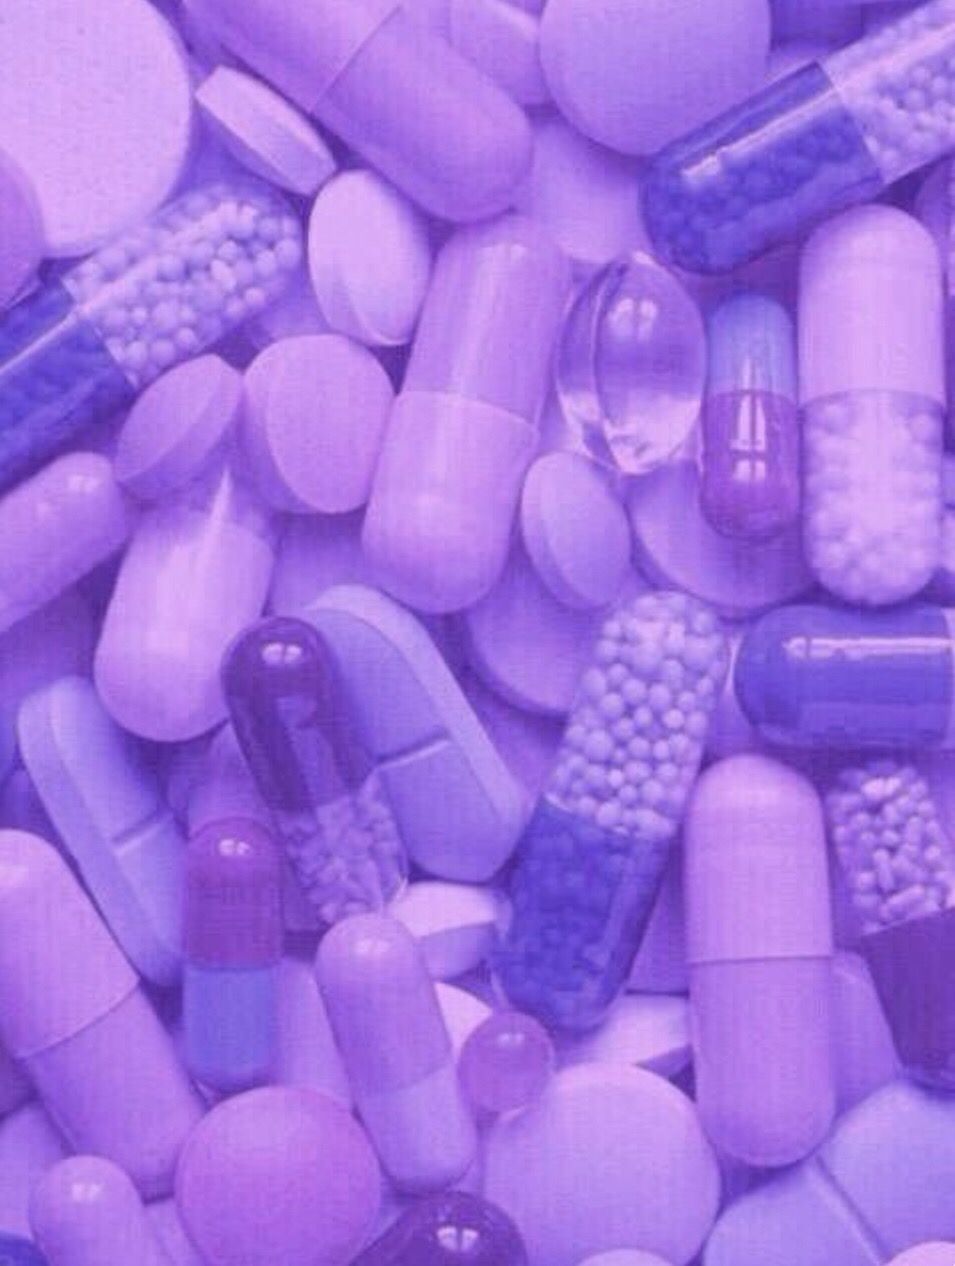 Aesthetic Drug Aesthetic iPhone Black And White Wallpaper. Violet aesthetic, Purple aesthetic, Lavender aesthetic